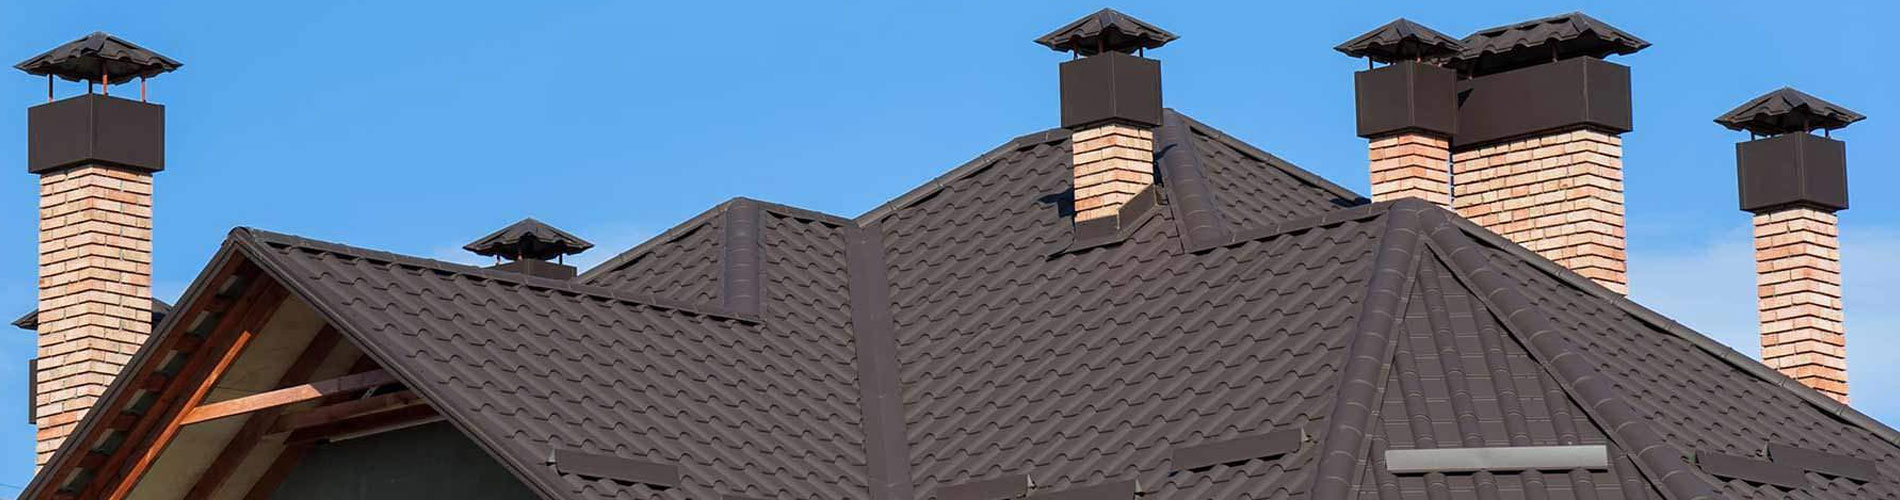 Concrete Tile Roofing Orange Cemented, Concrete Tile Roofing